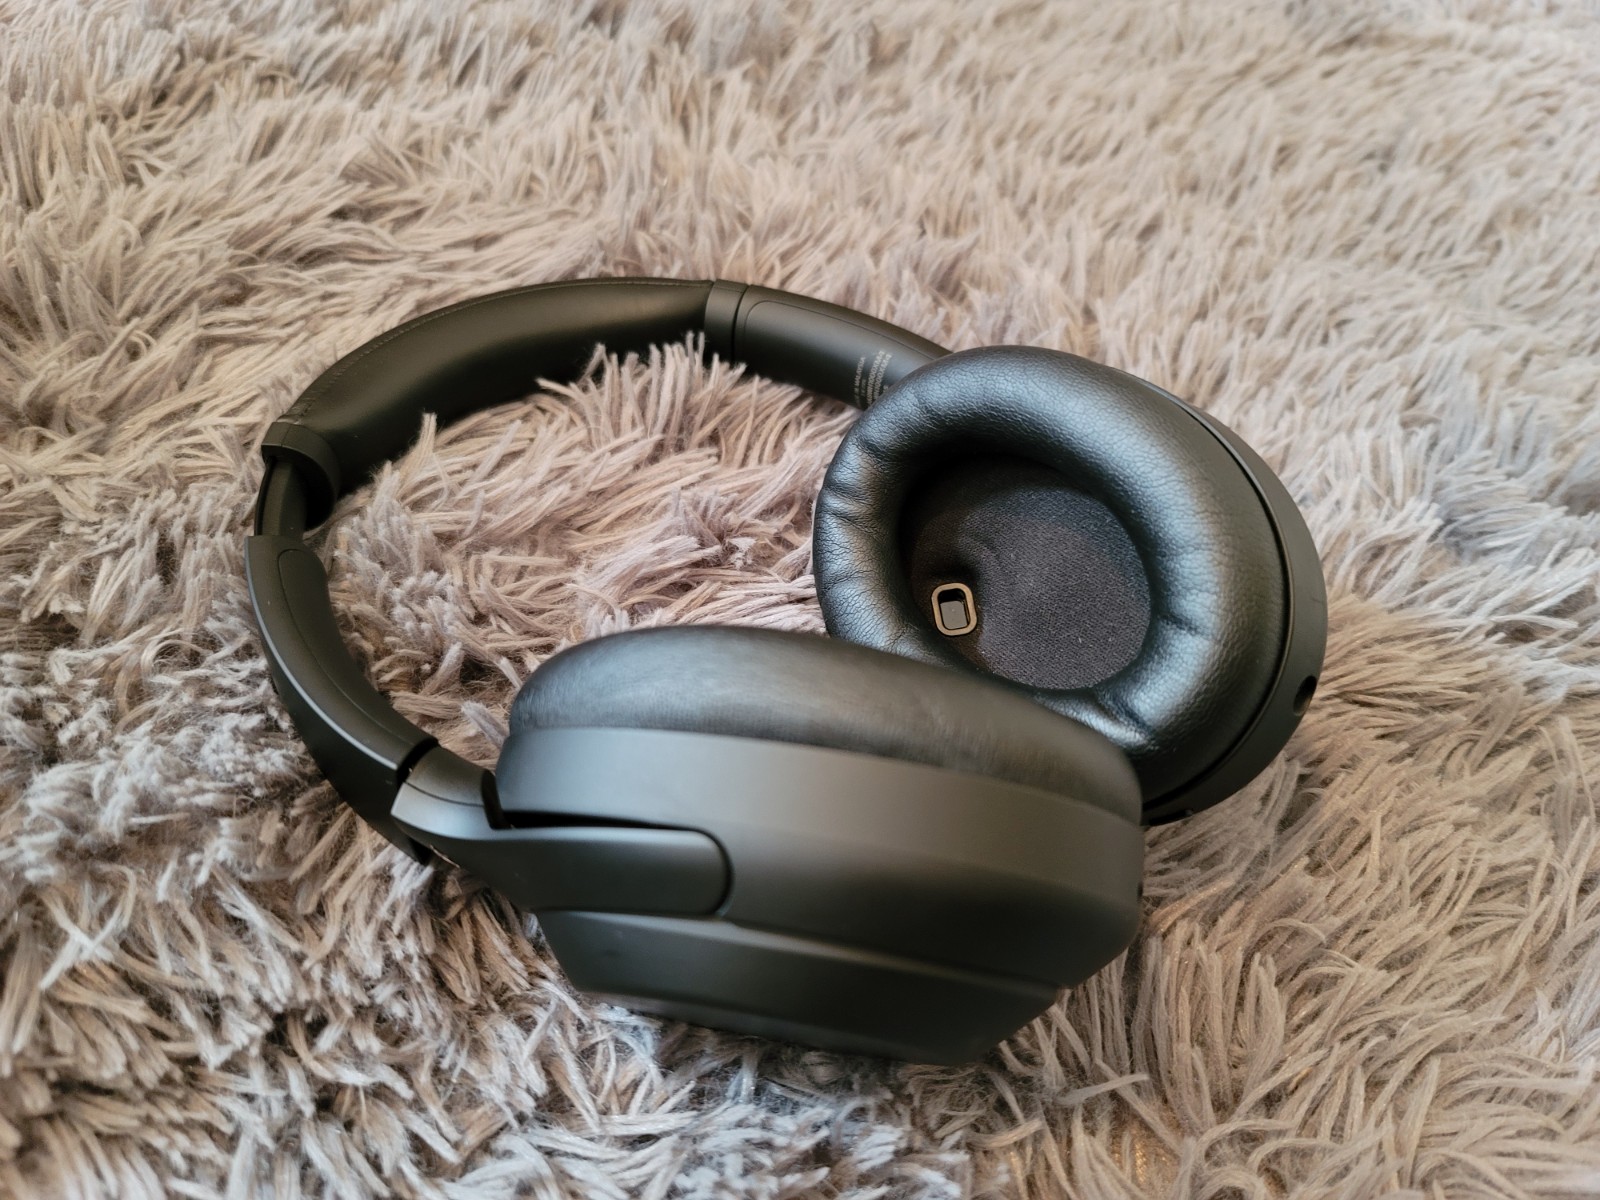 Sony WH-1000XM4 headphone review | TechCrunch